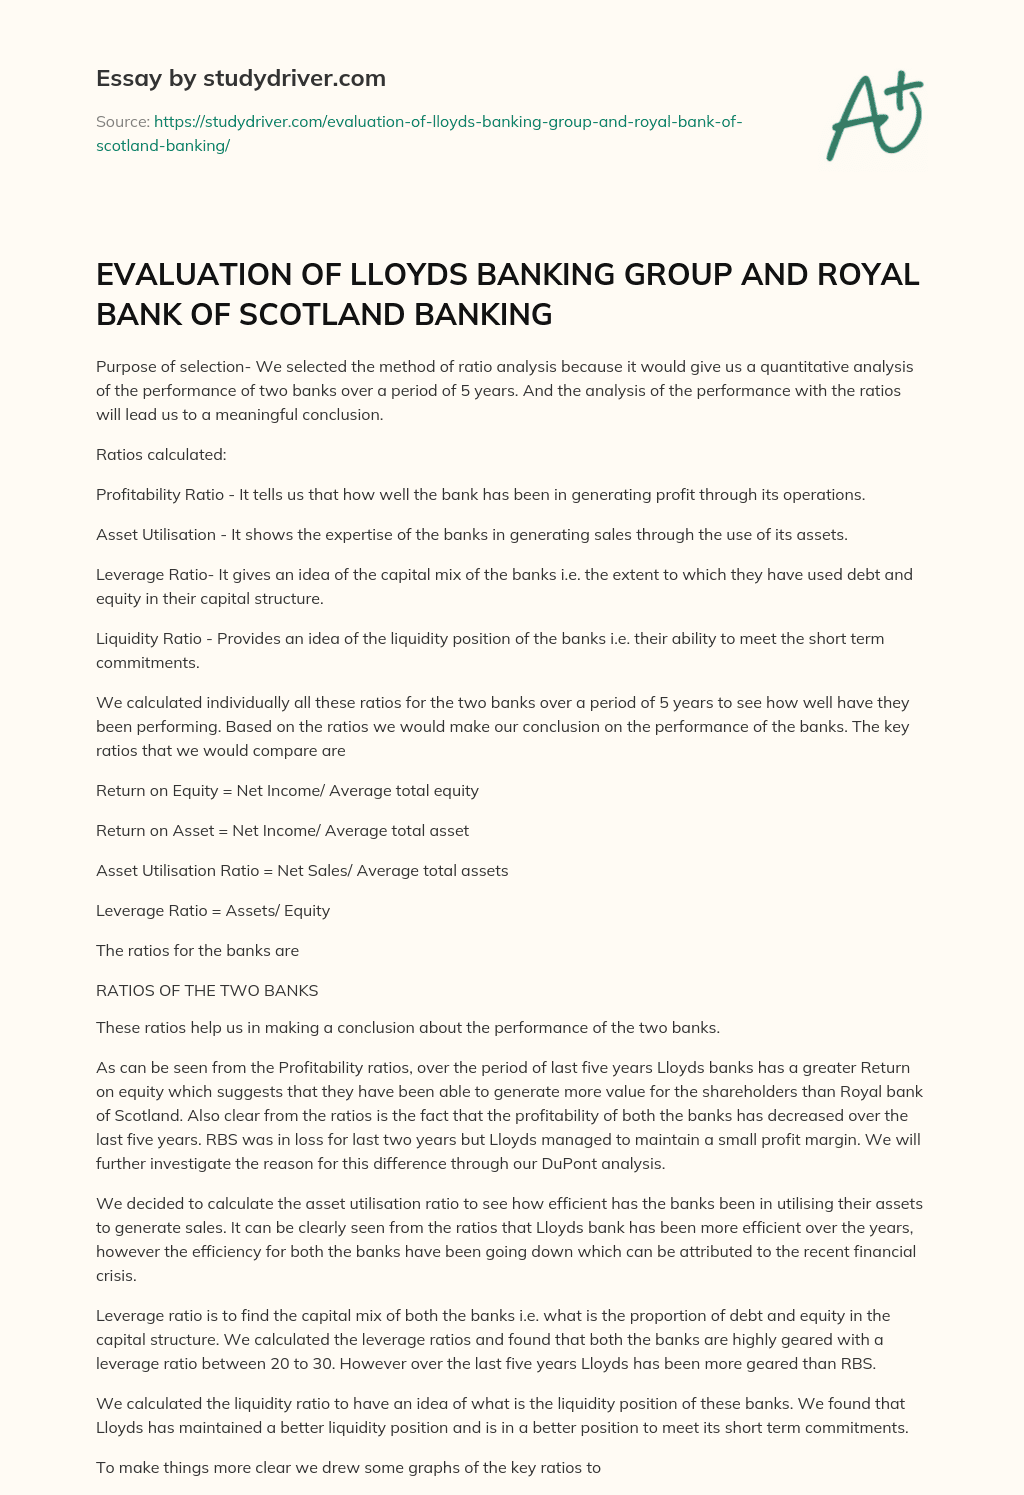 EVALUATION of LLOYDS BANKING GROUP and ROYAL BANK of SCOTLAND BANKING essay